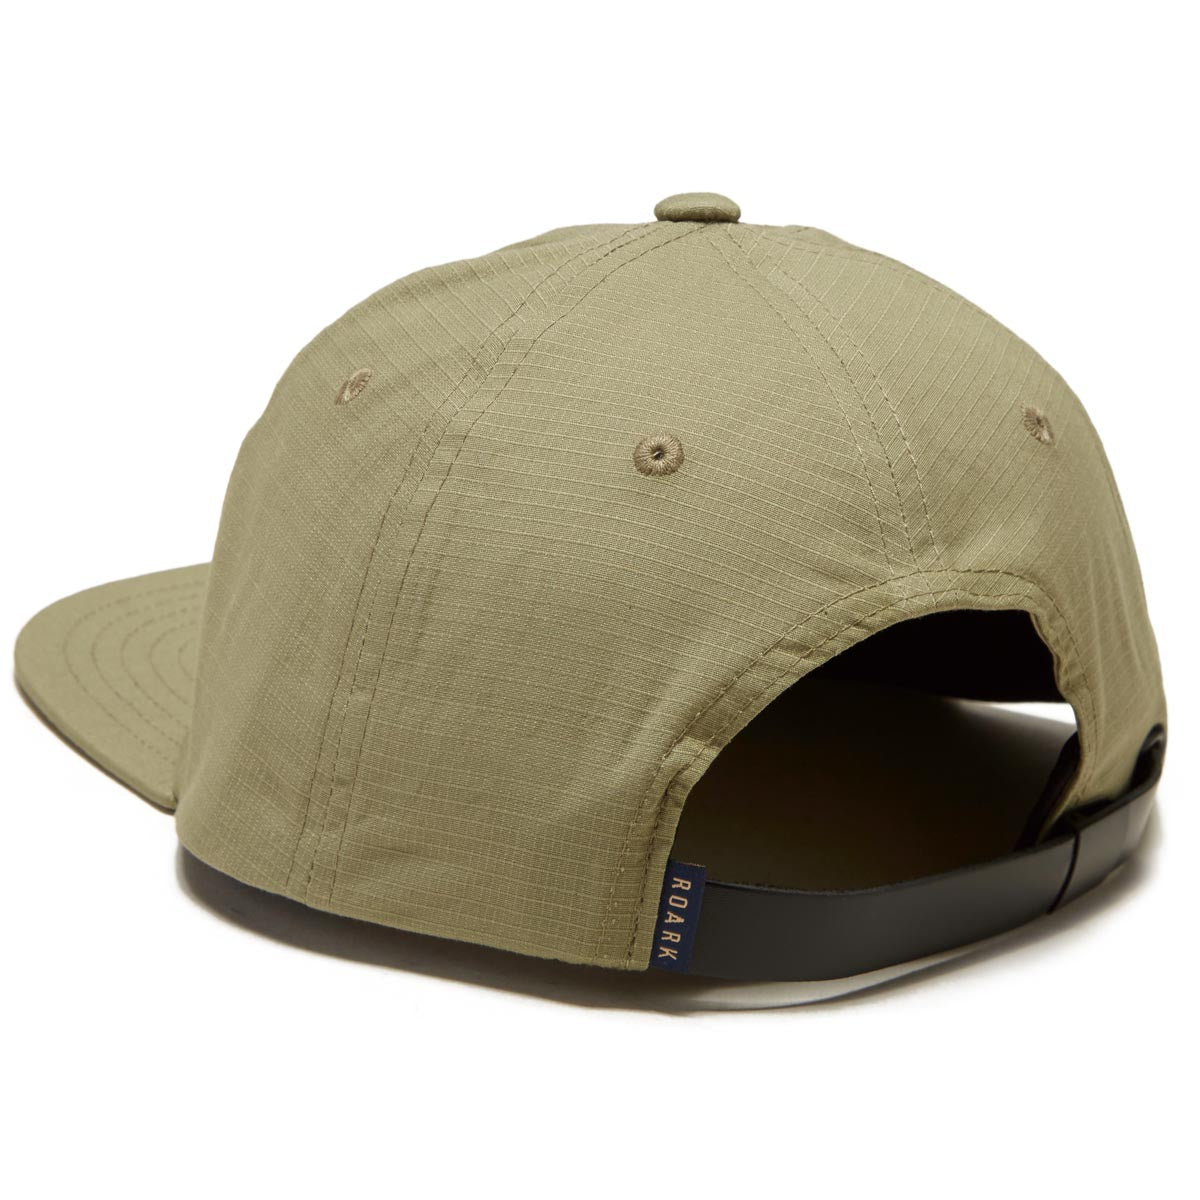 Roark Campover Strapback Hat - Dusty Green image 2